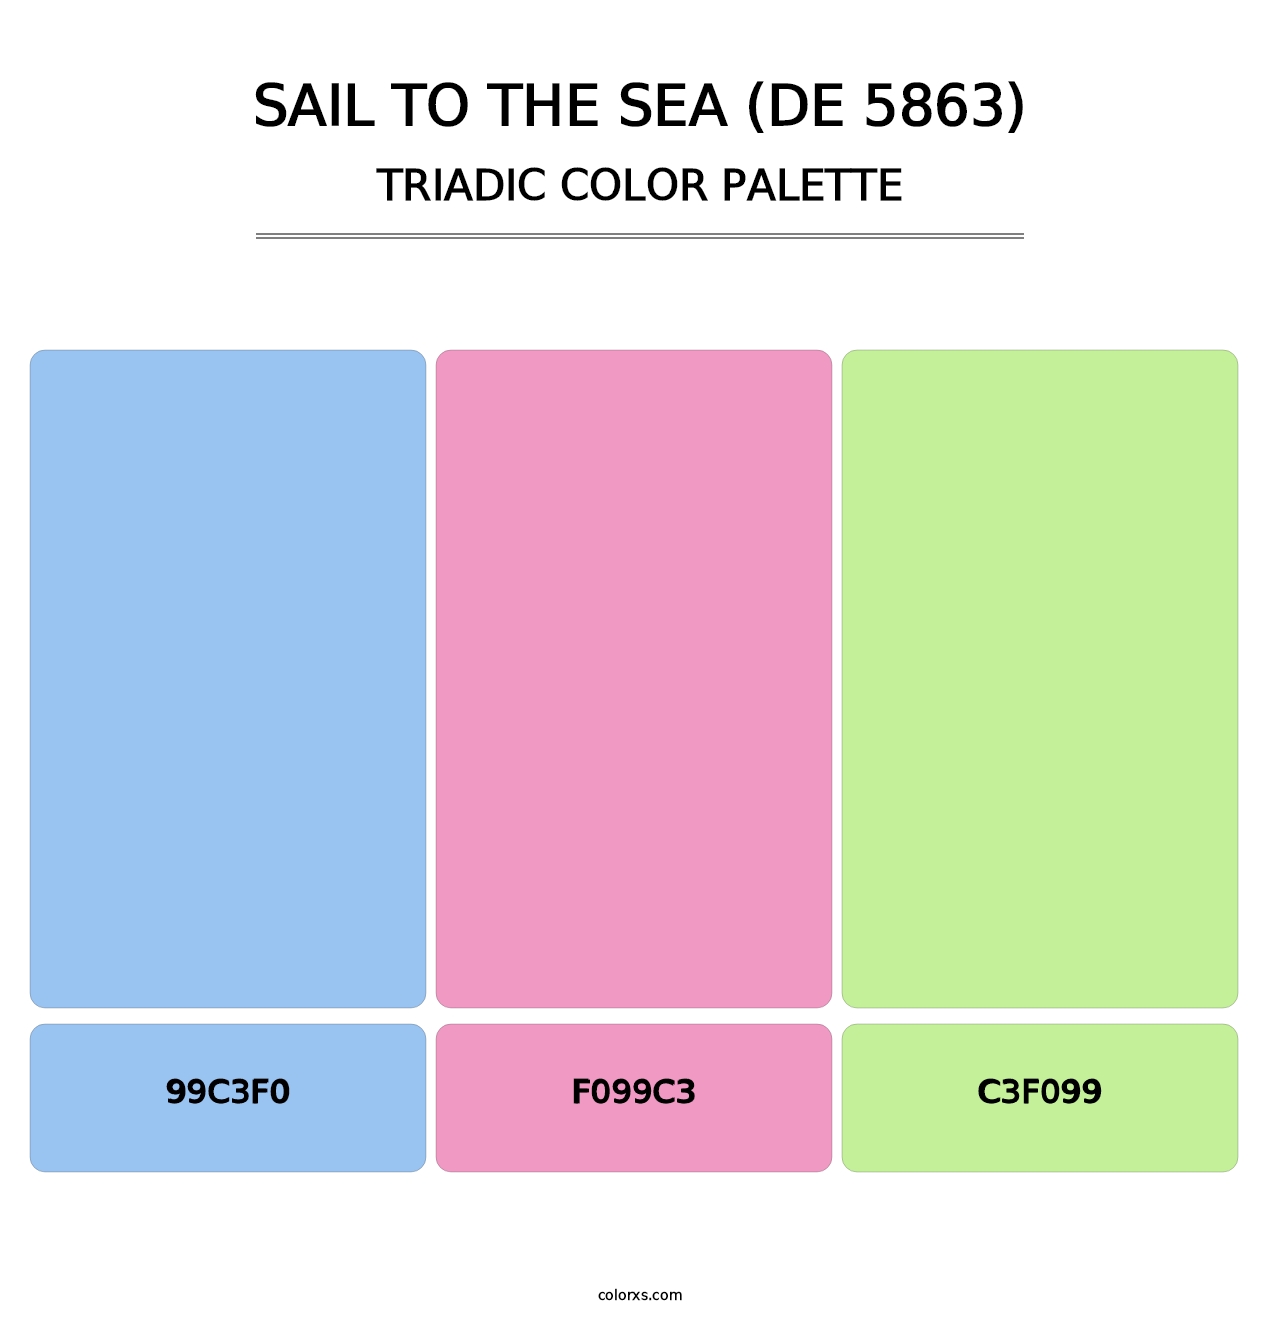 Sail to the Sea (DE 5863) - Triadic Color Palette